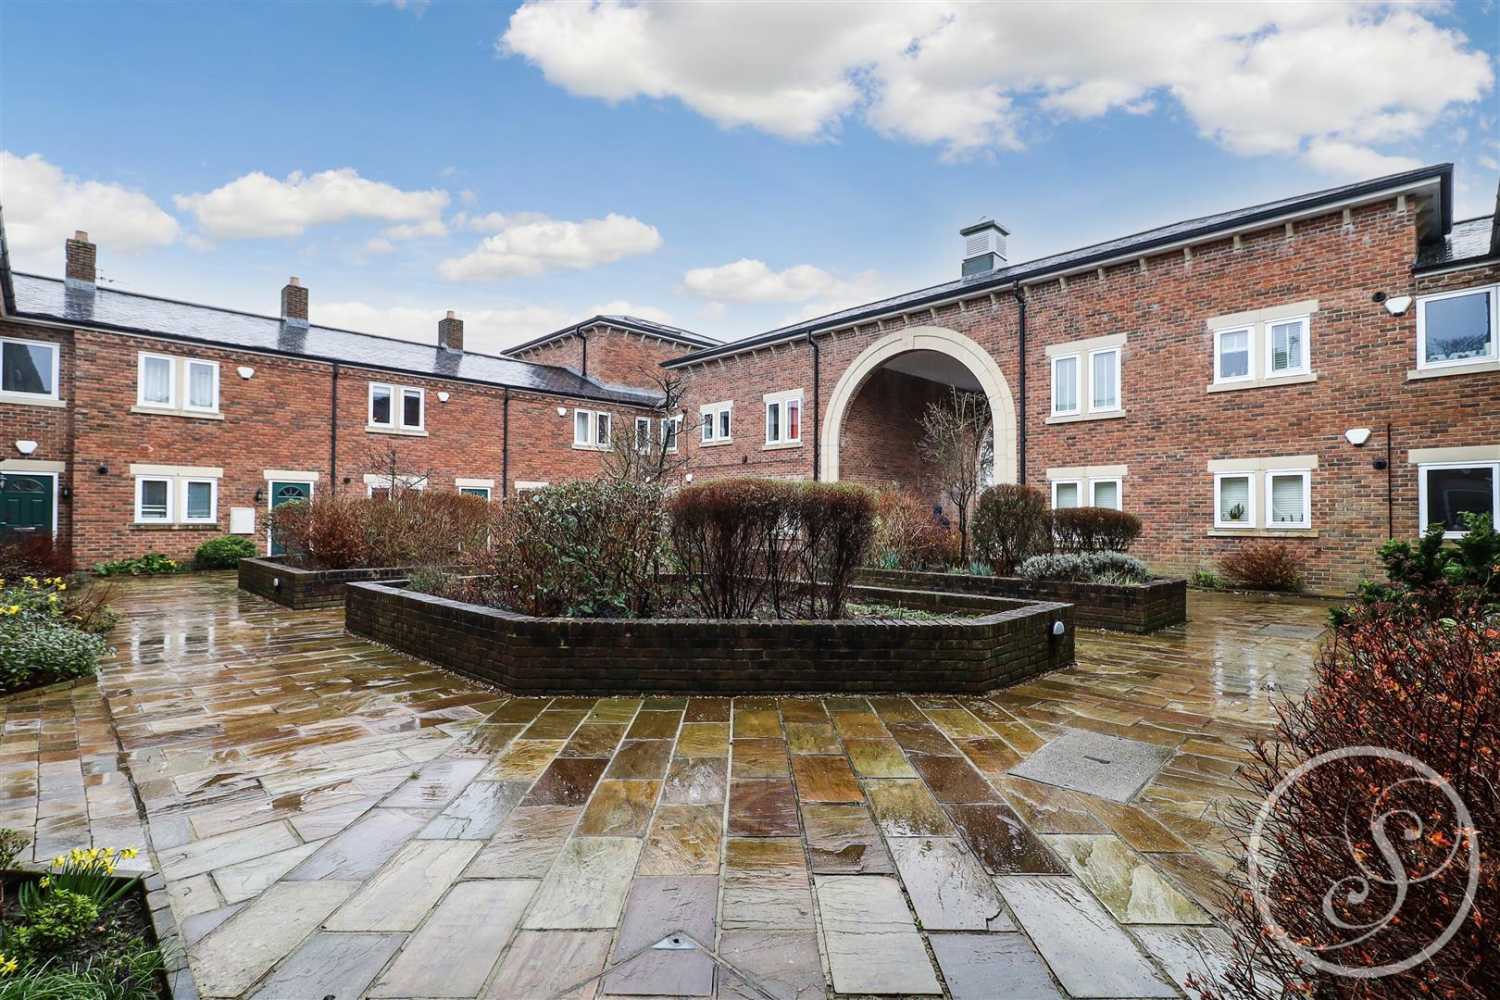 Three-bed flat, Meanwood, Leeds, £250,000 - exterior